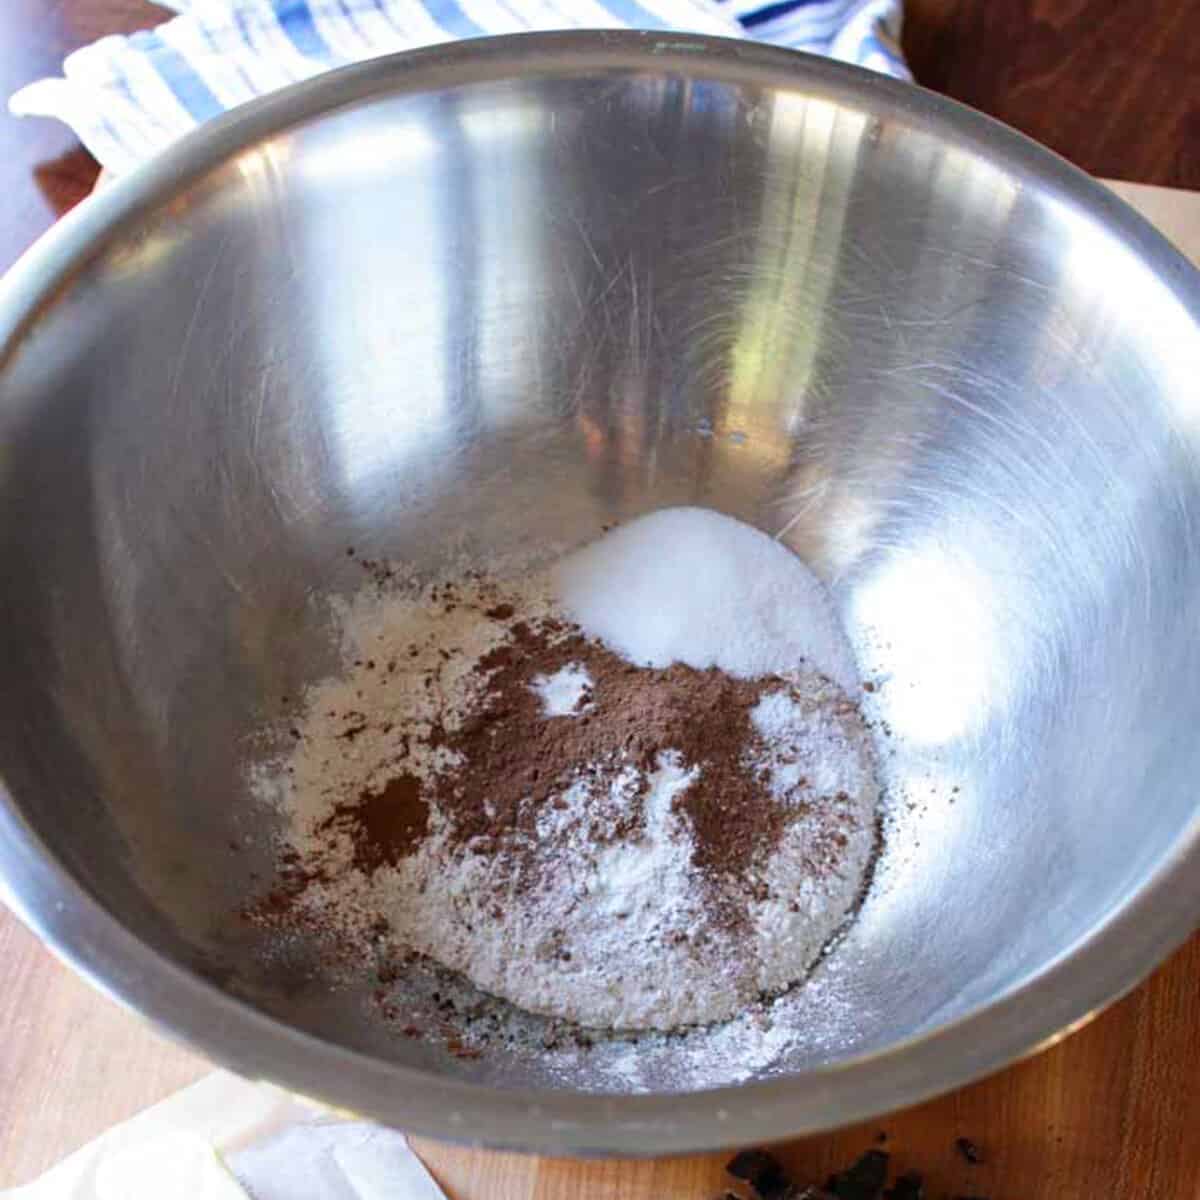 cocoa powder, flour, sugar, cinnamon and salt in a mixing bowl.